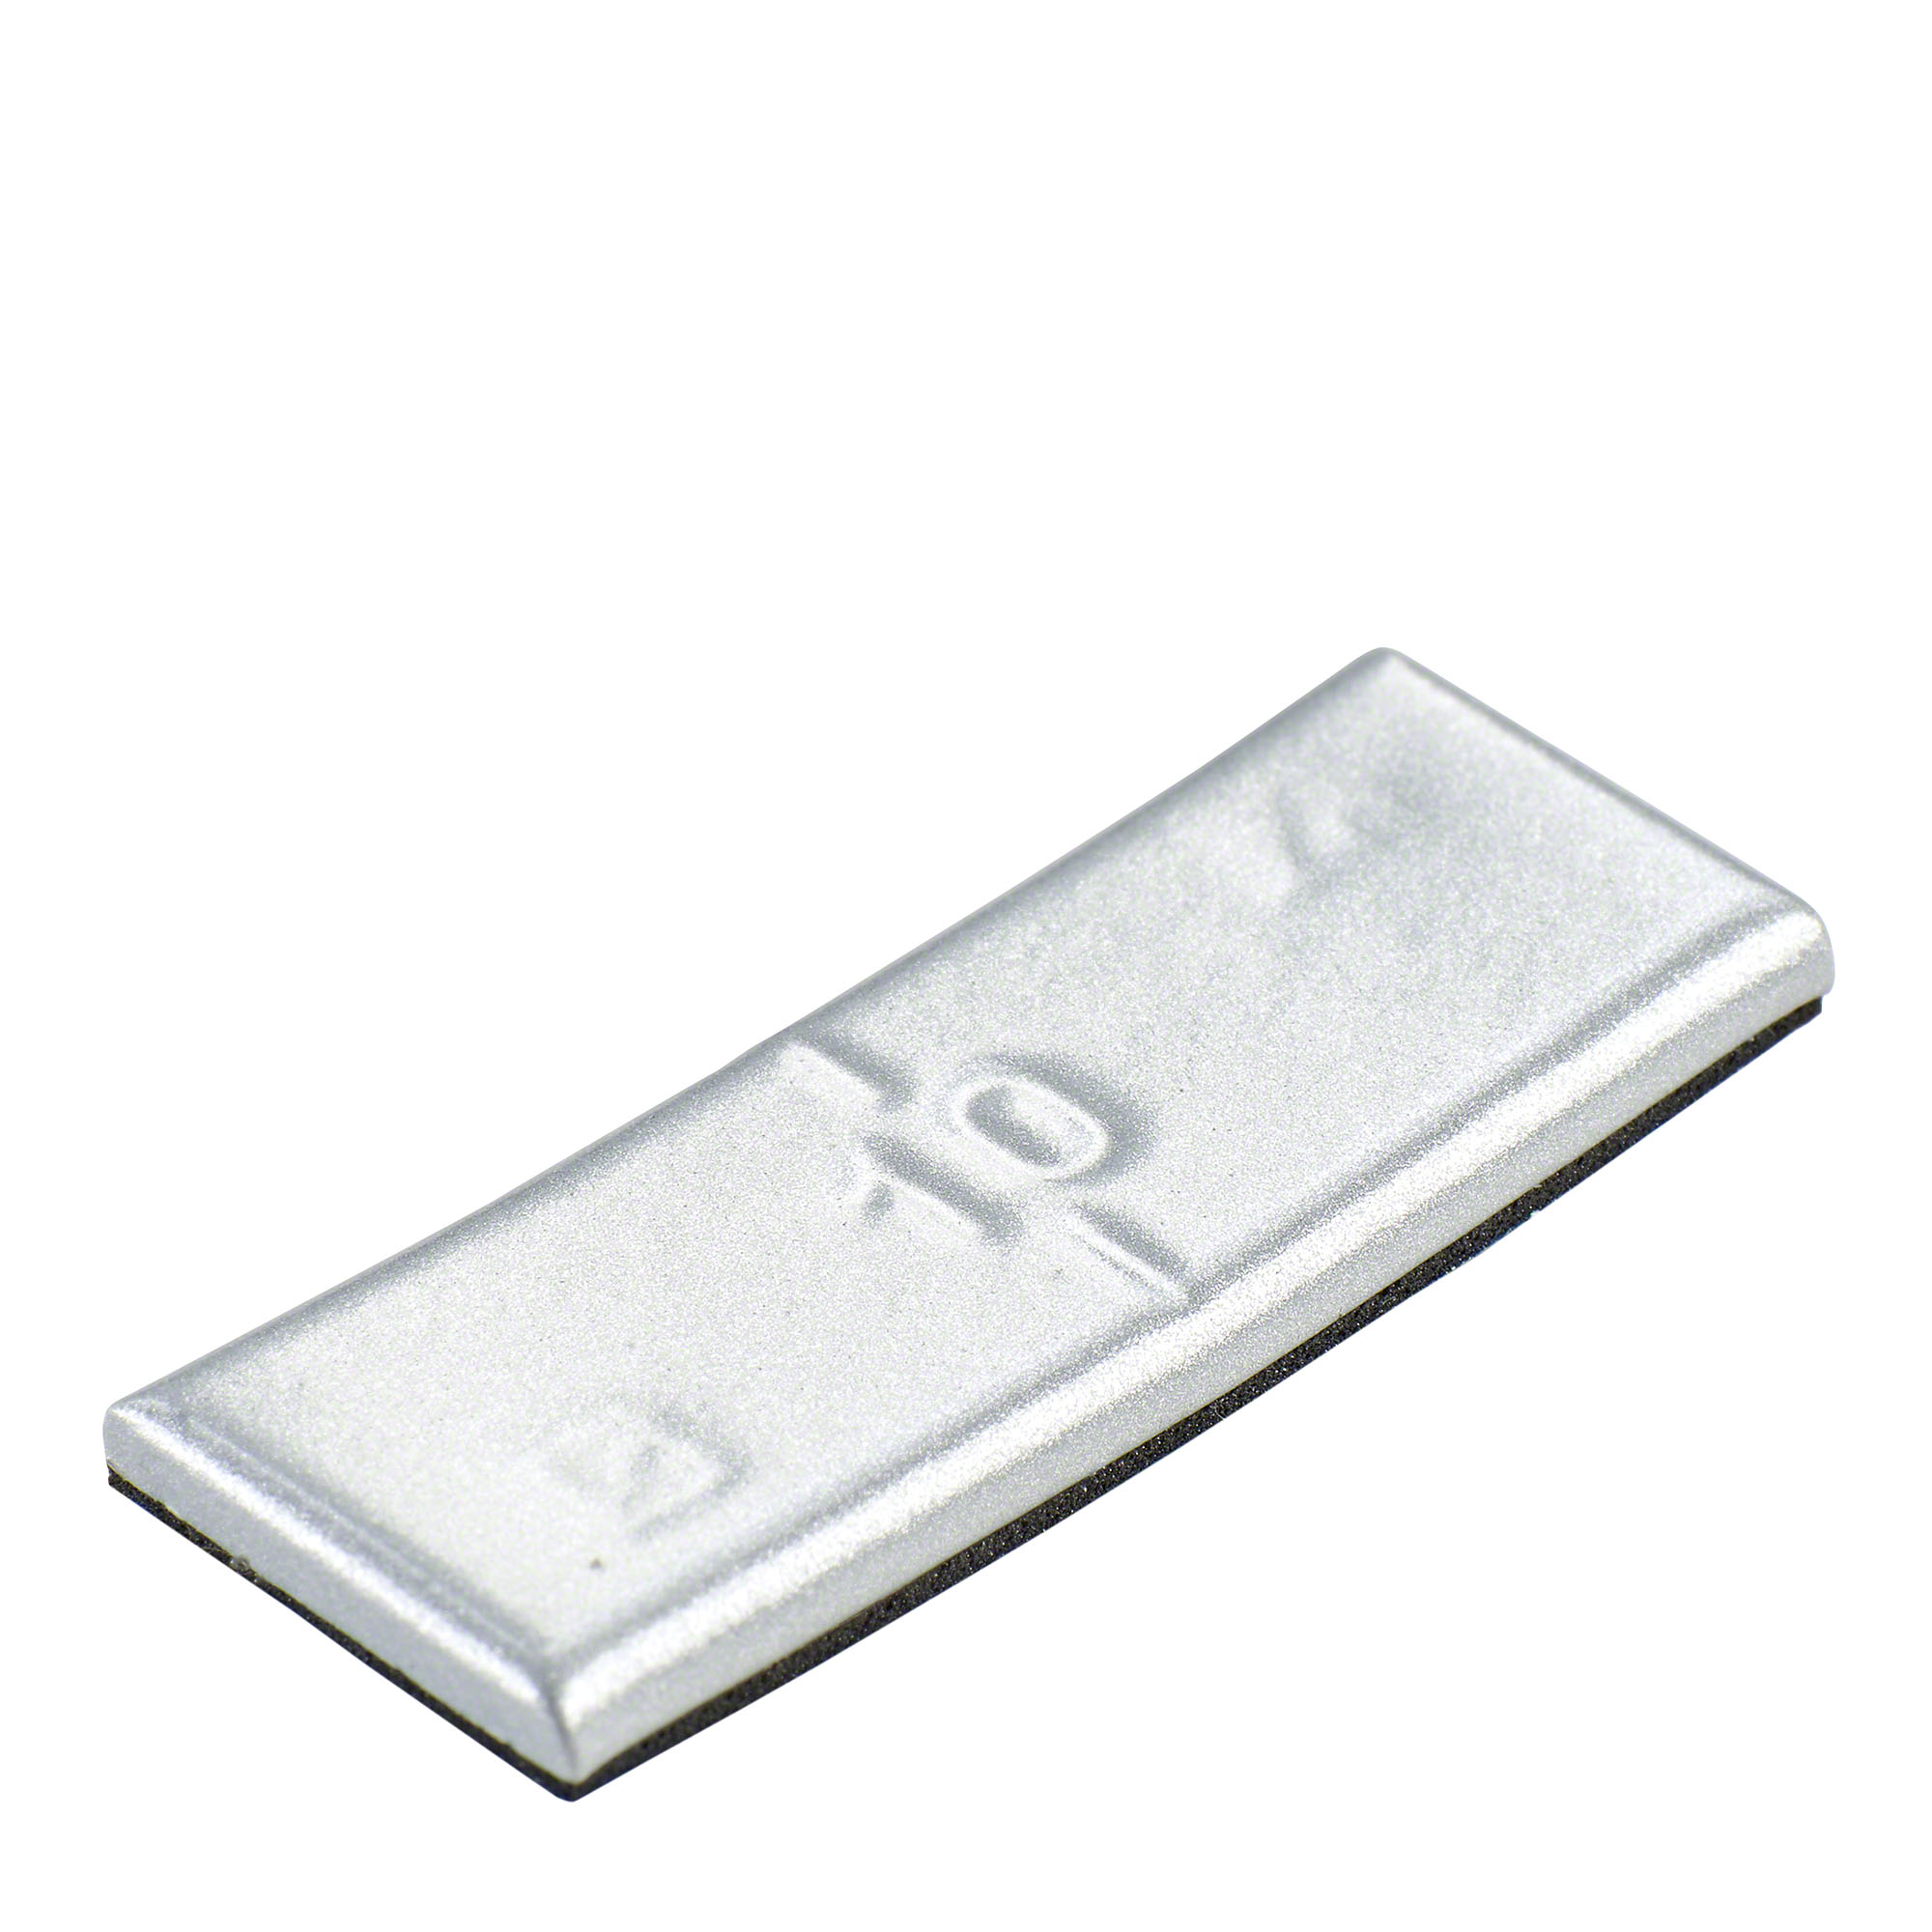 Peso adesivo - Typ 360, 10 g, zinco, argento